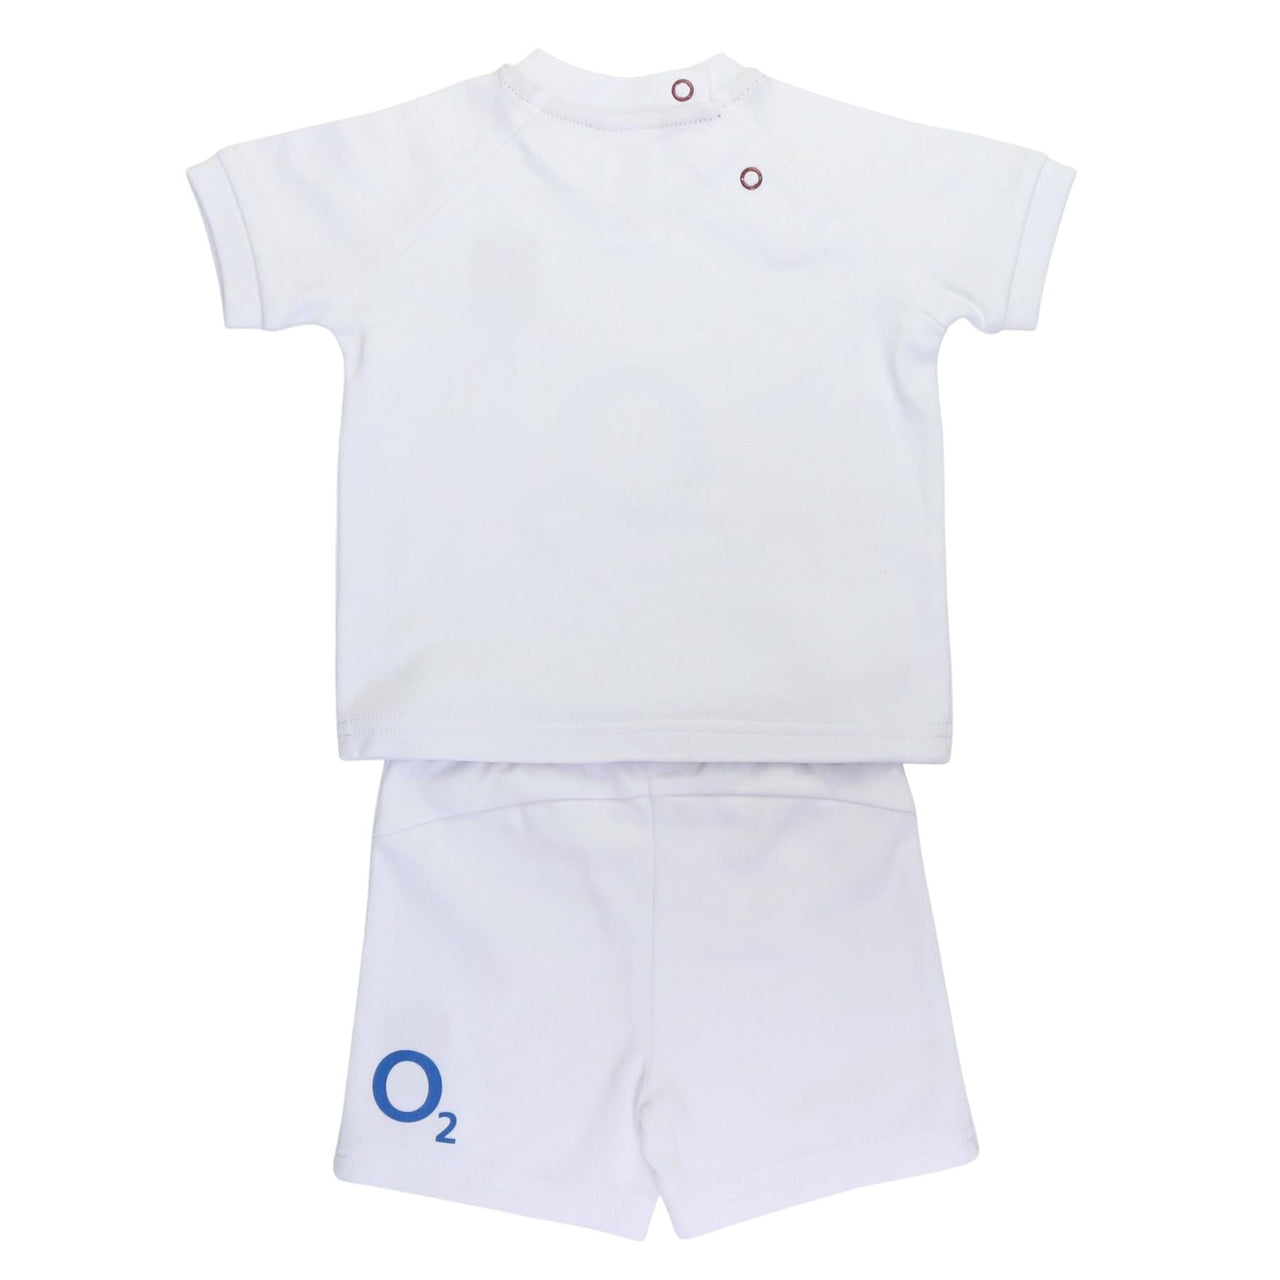 England RFU Rugby Baby/Toddler T-Shirt & Shorts Set | White | 2023/24